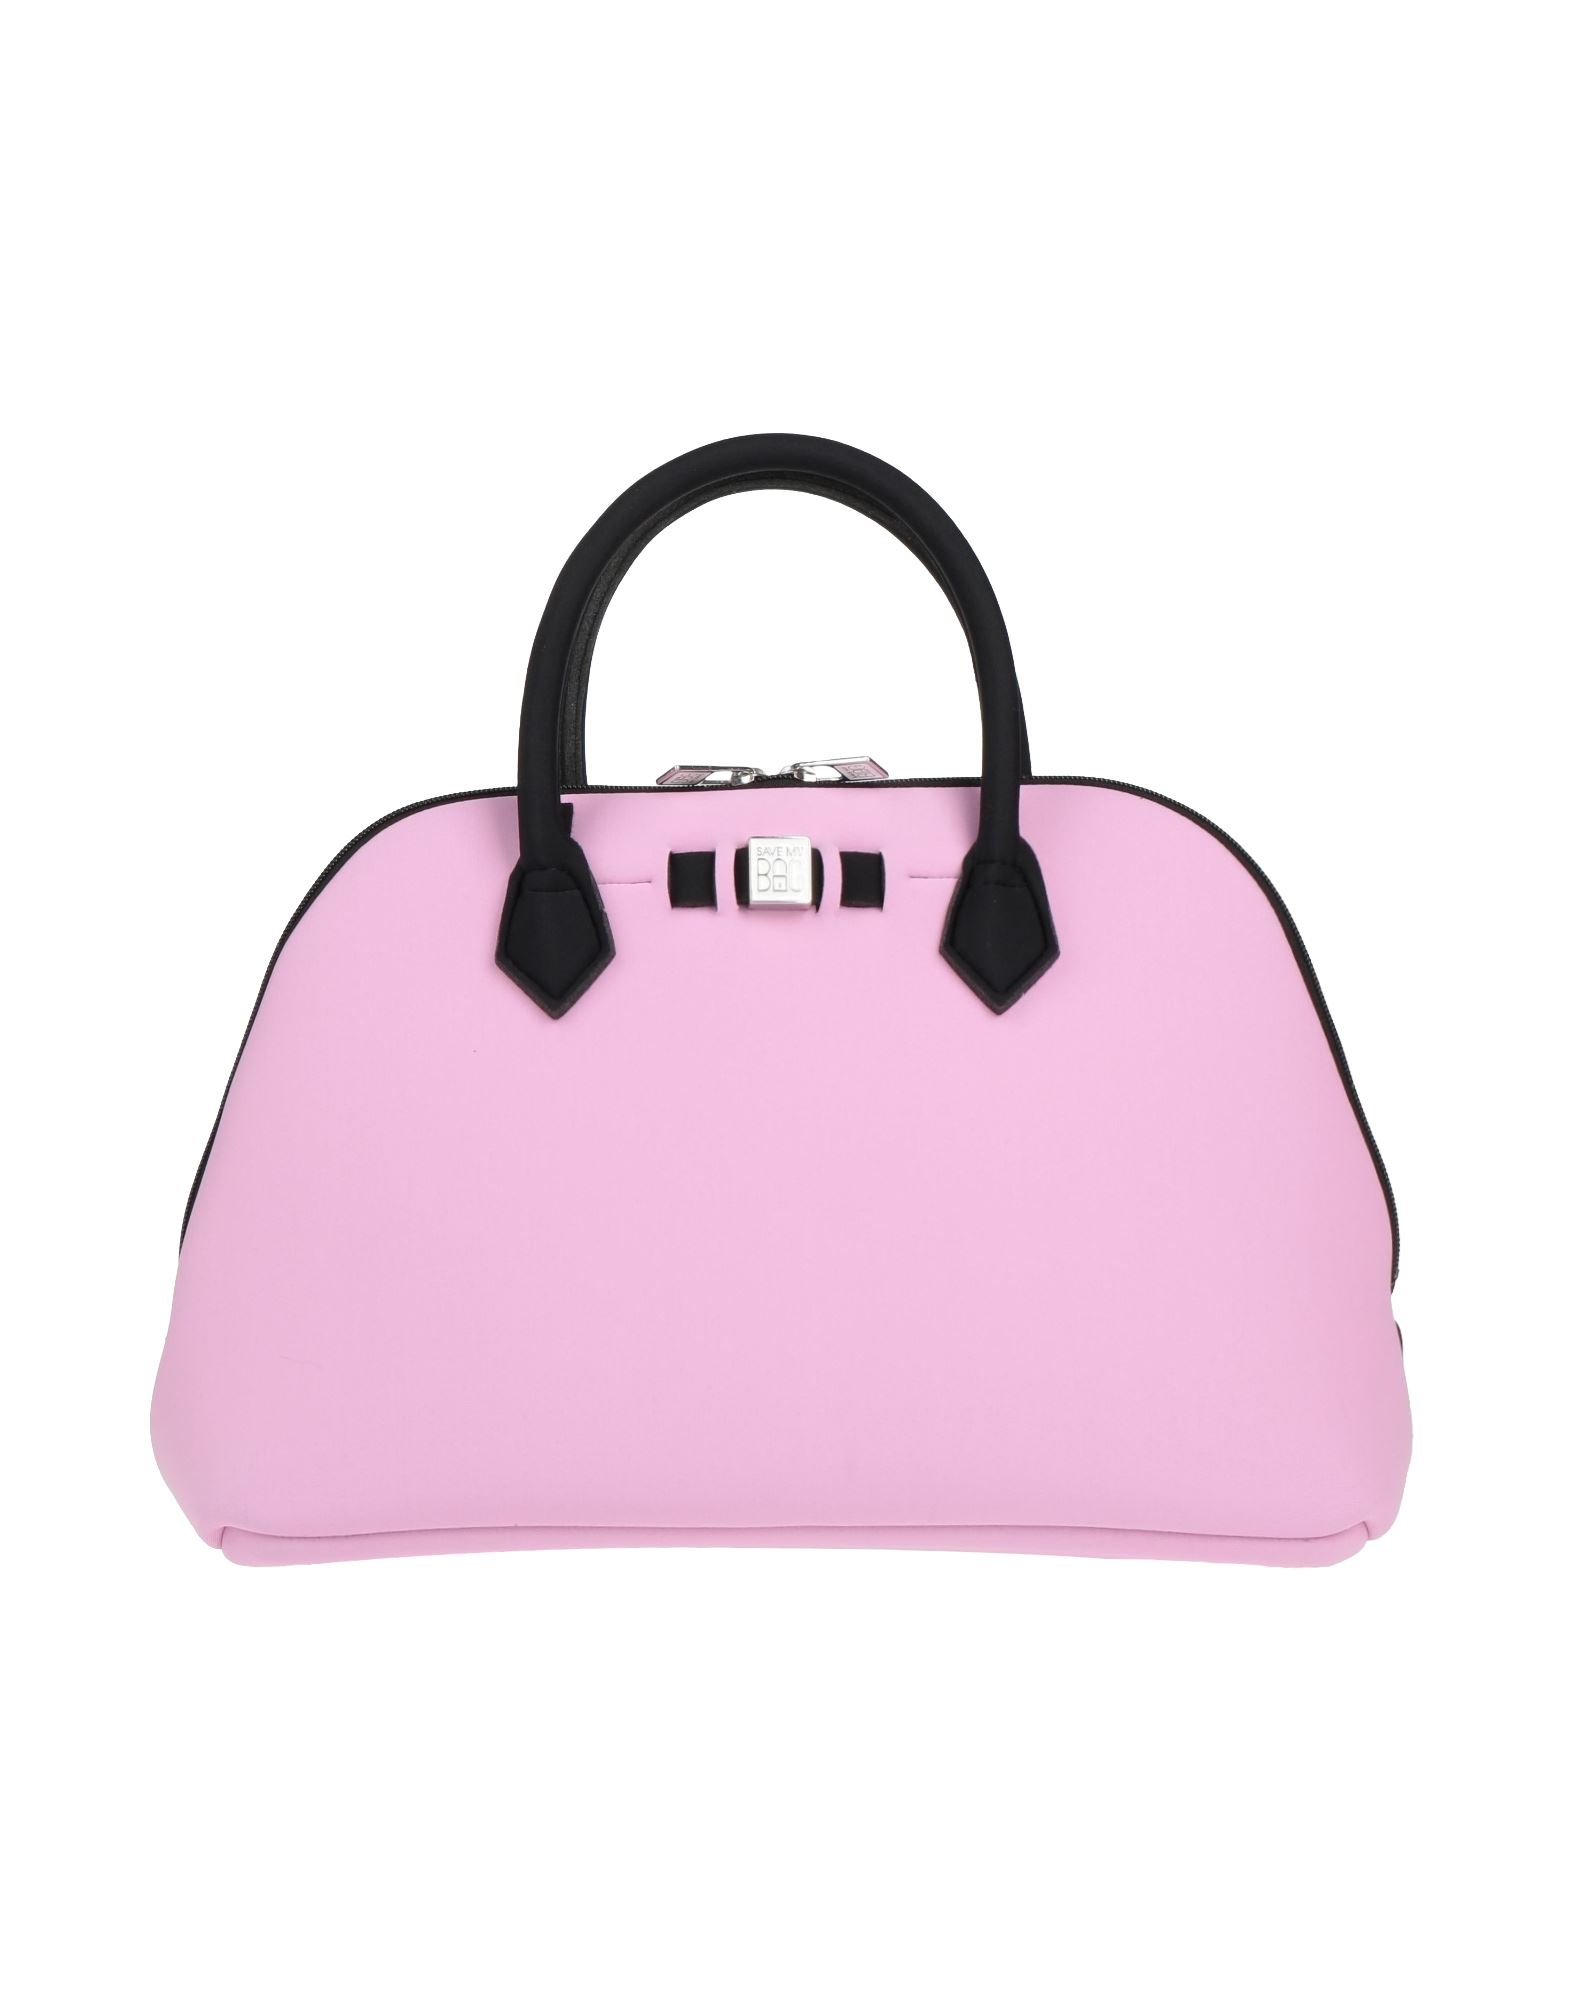 Save My Bag Handbags In Light Pink